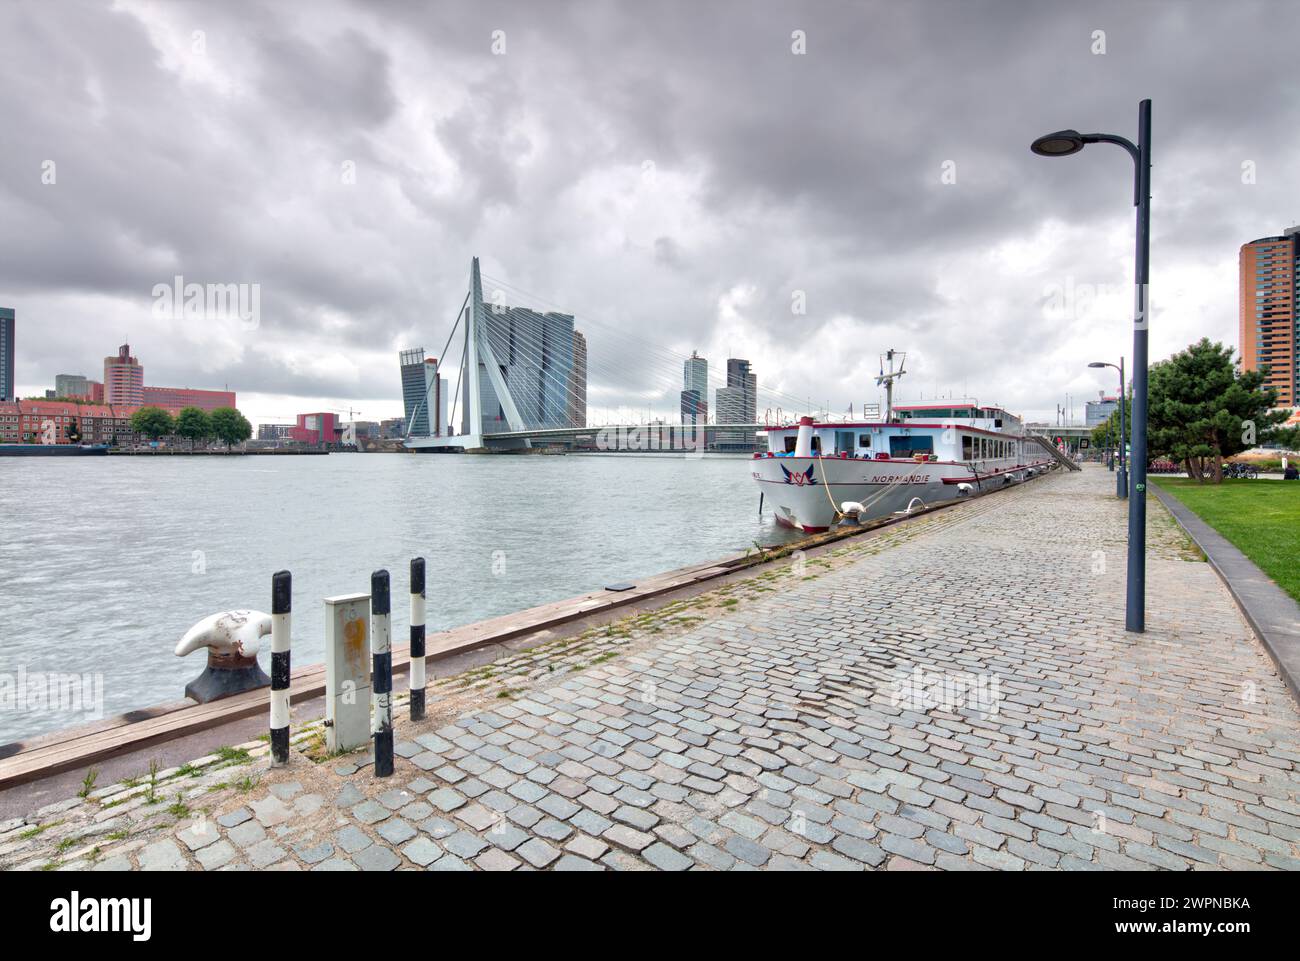 Boompjeskade, ponte Erasmus, ponte strallato, Nieuwe Maas, delta Reno-Mosa, ponte strallato, Rotterdam, Paesi Bassi, Foto Stock